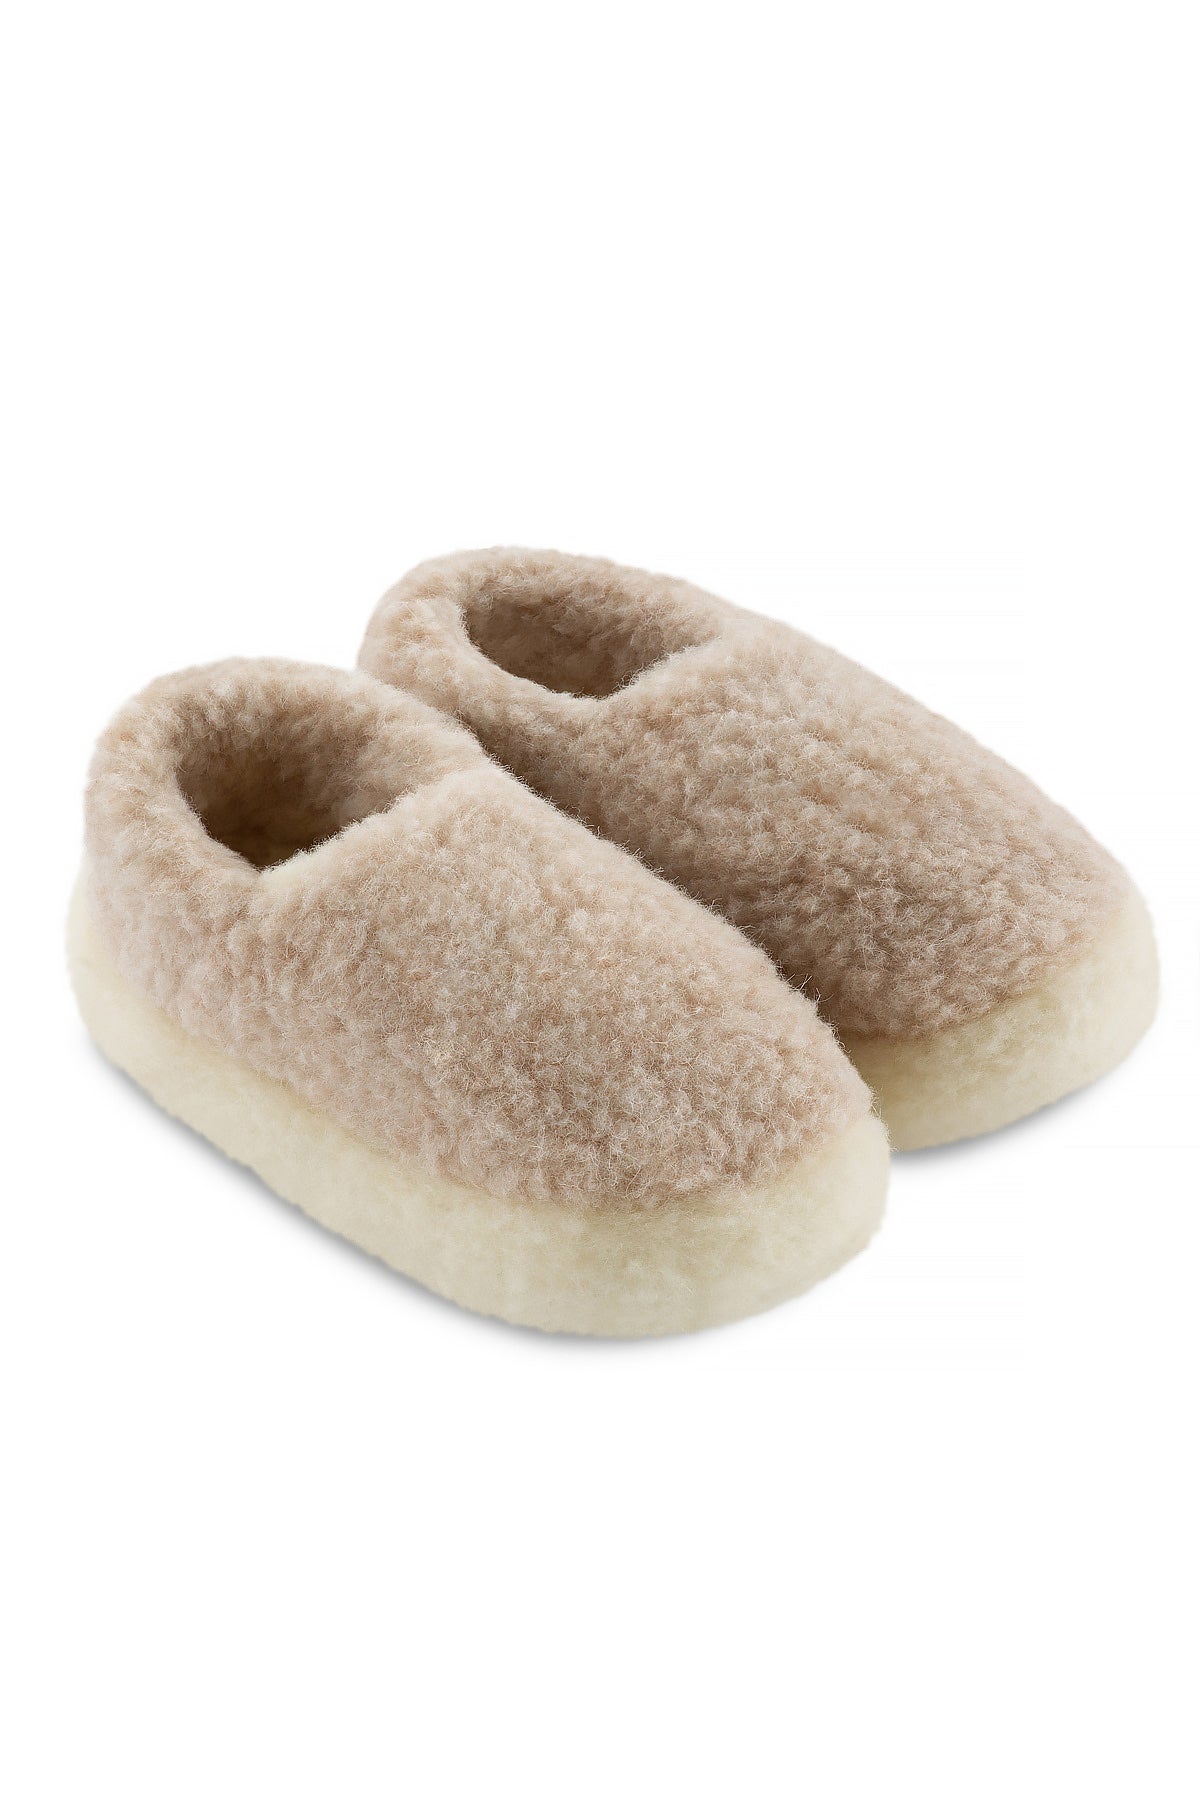 Unisex Siberian Slippers | Beige | 3 Sizes | Merino Wool | by Yoko Wool - Lifestory - Yoko Wool